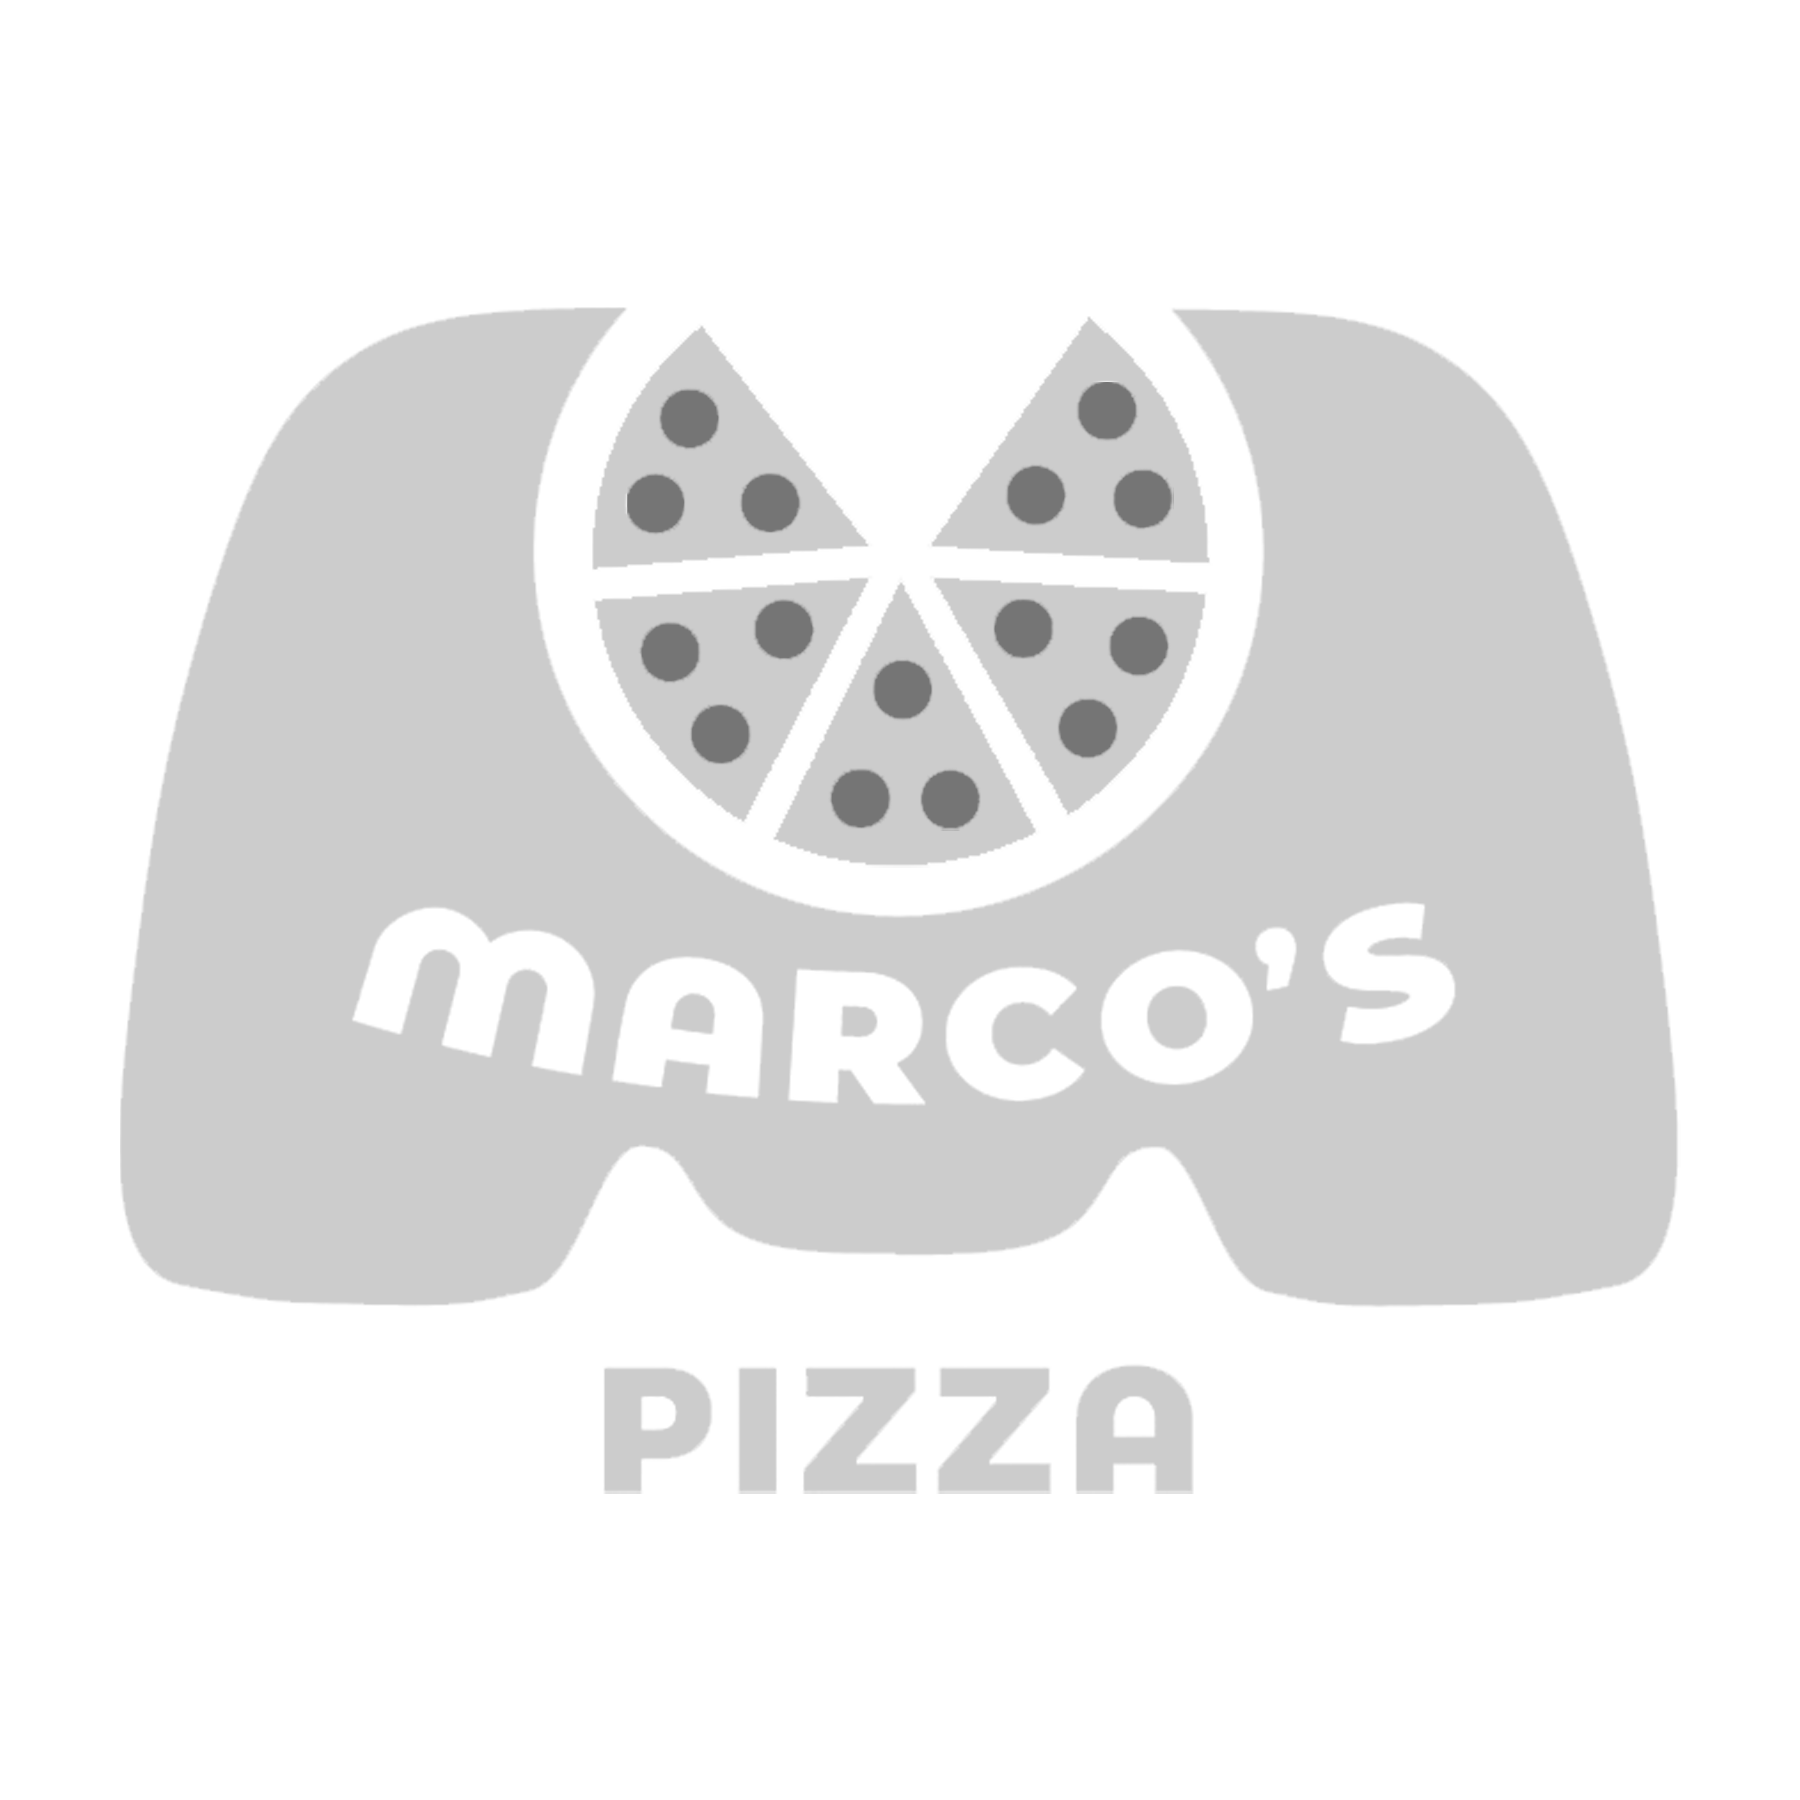 Marcos Pizza Logo